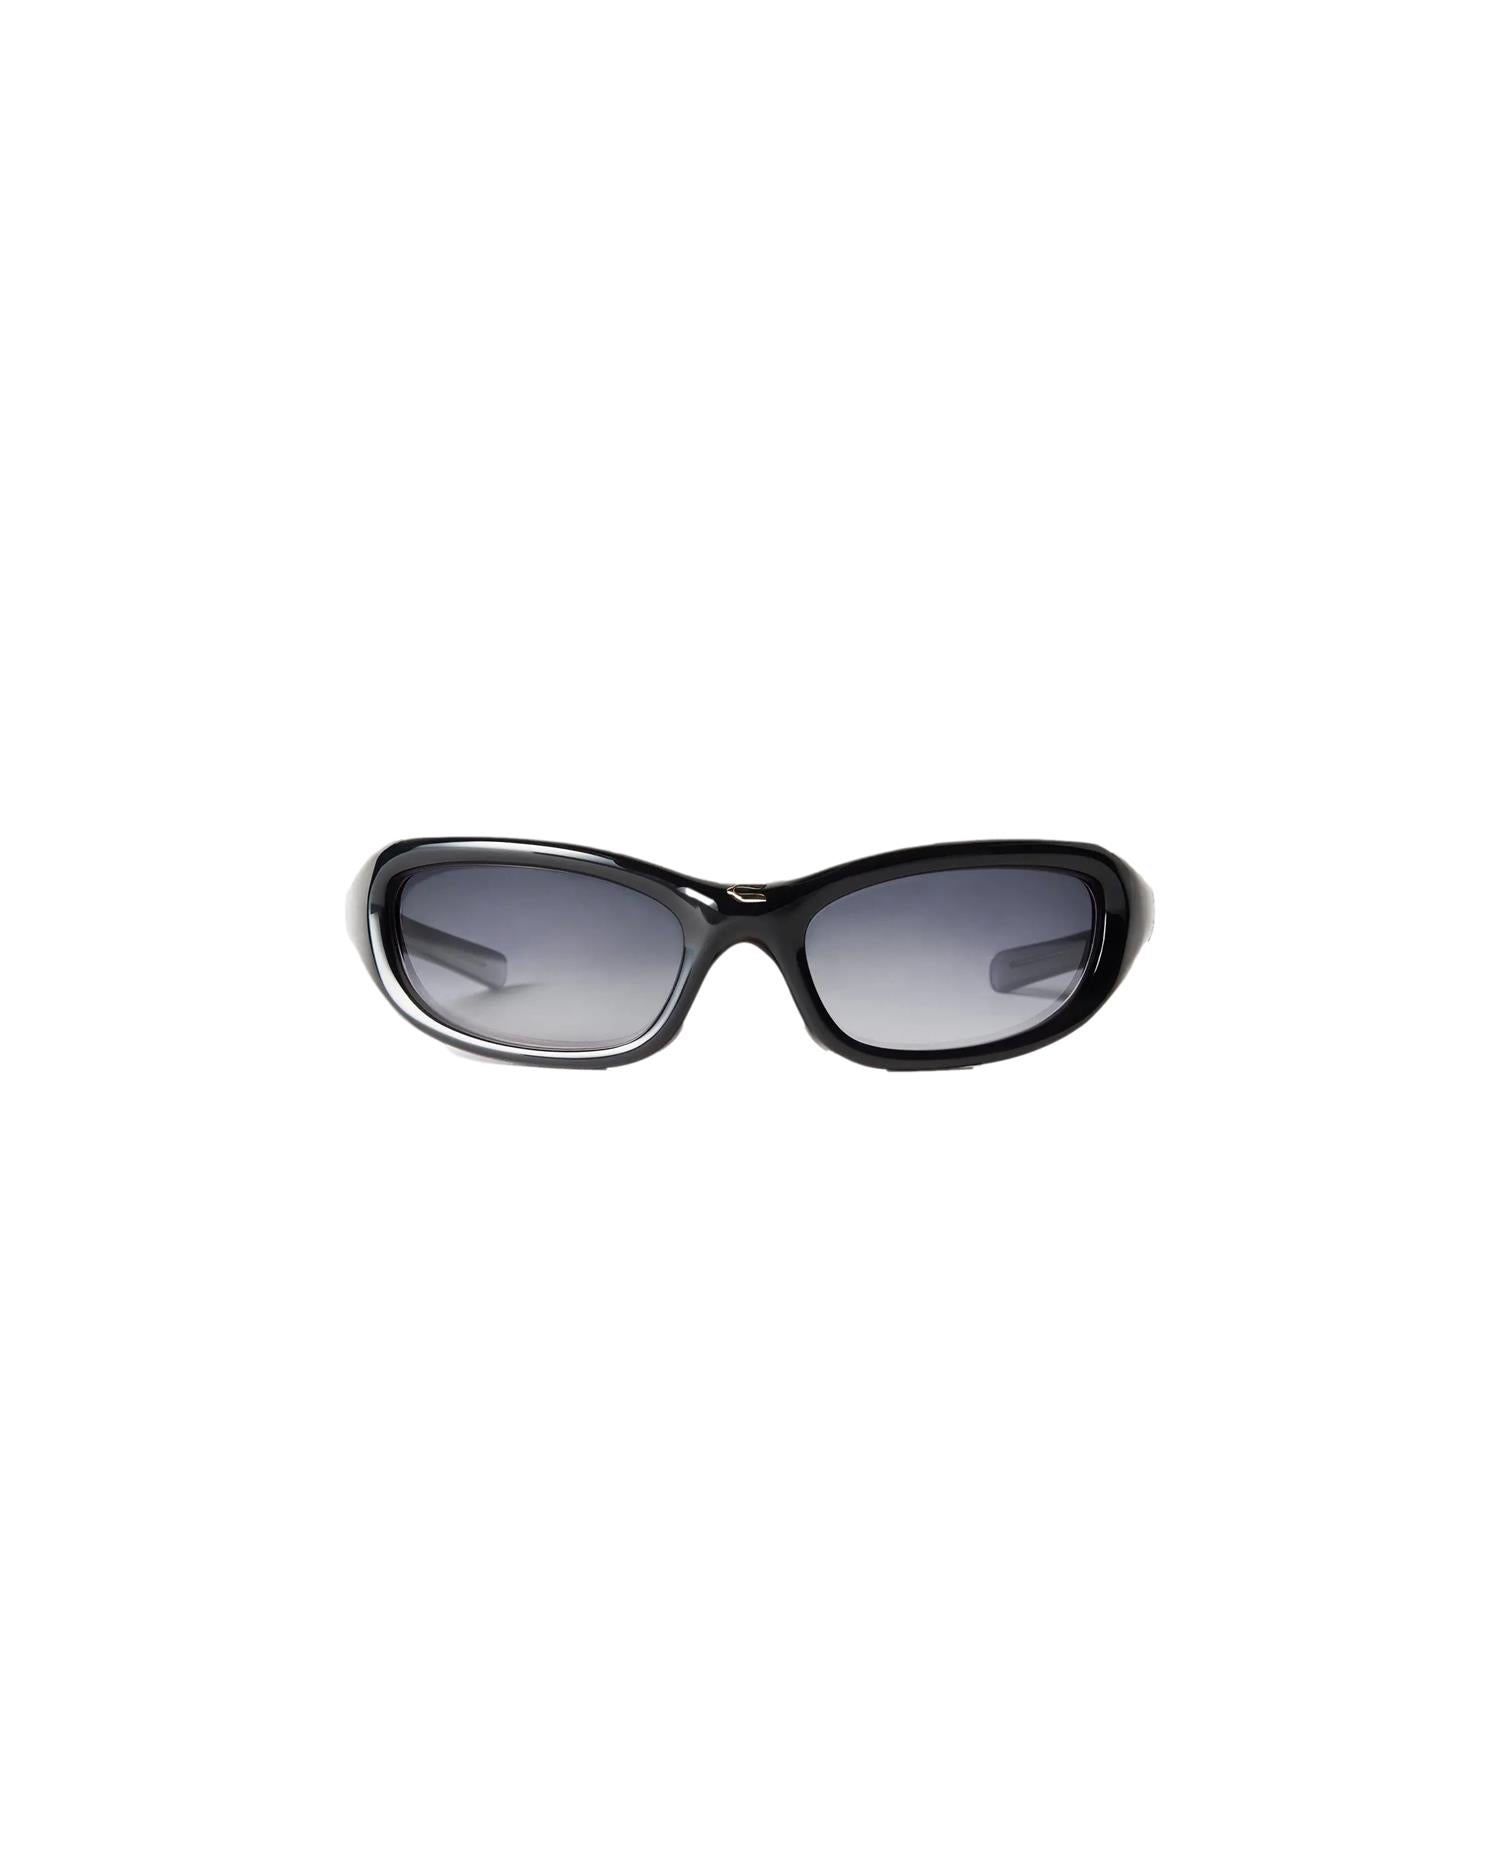 Chimi Eyewear Fog Grey Solbriller Sort